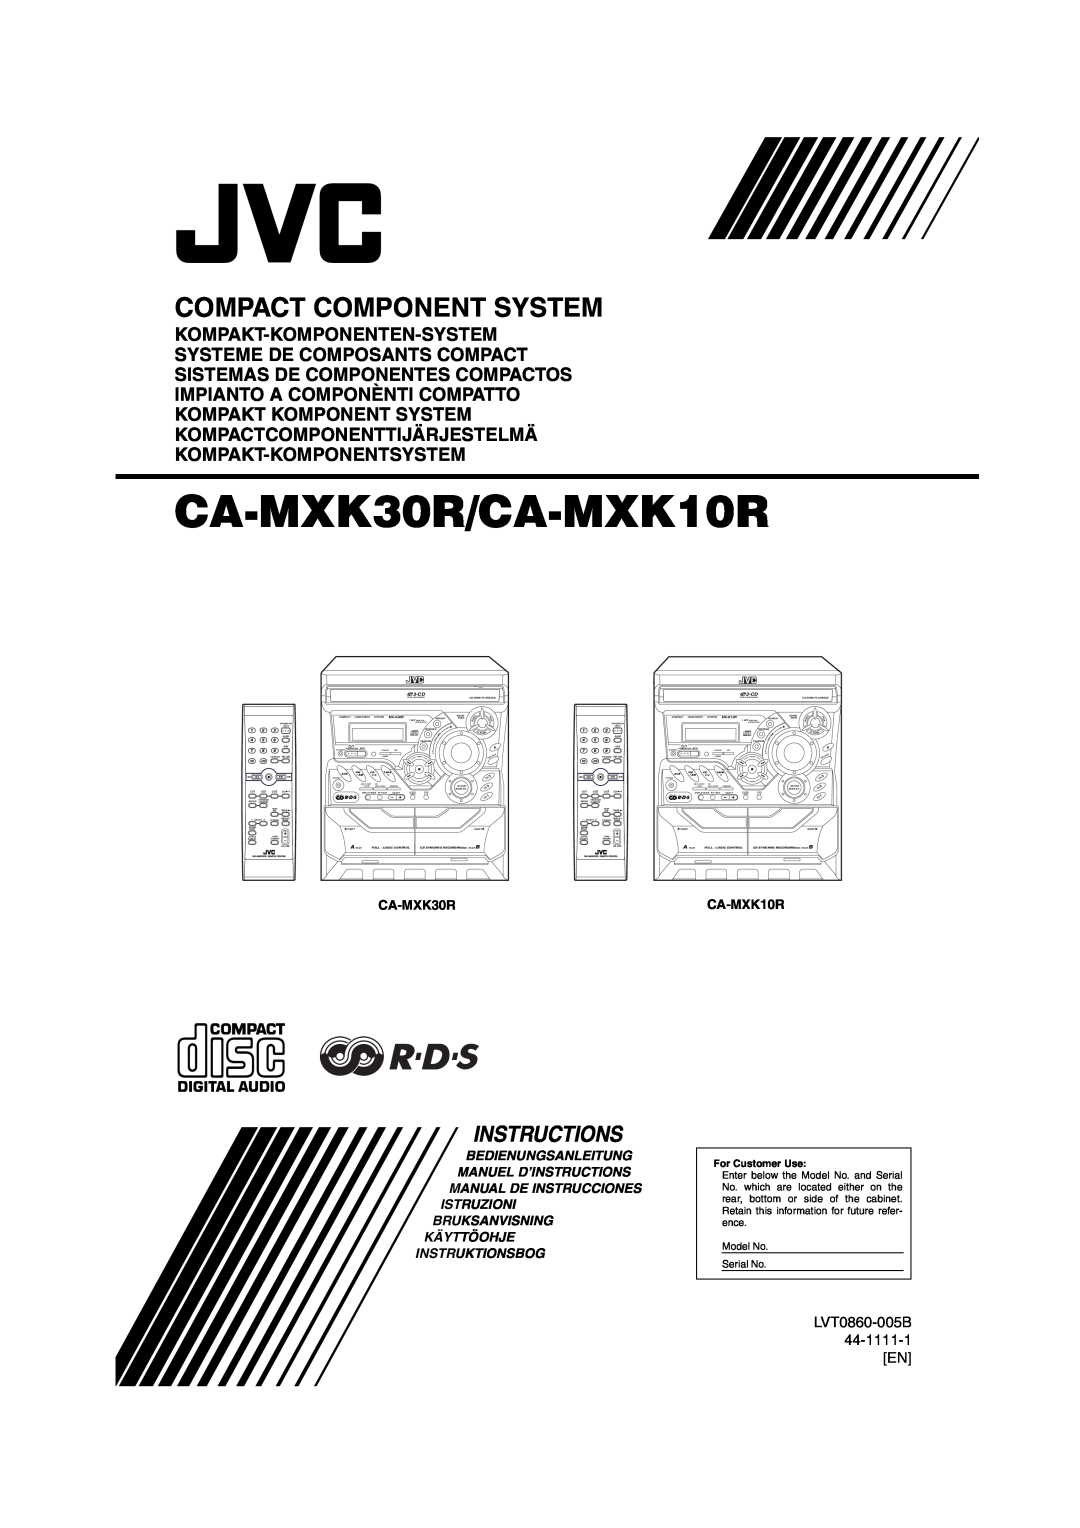 JVC manual CA-MXK30R/CA-MXK10R, Compact Component System, Instructions, Kompakt-Komponenten-System, Bedienungsanleitung 